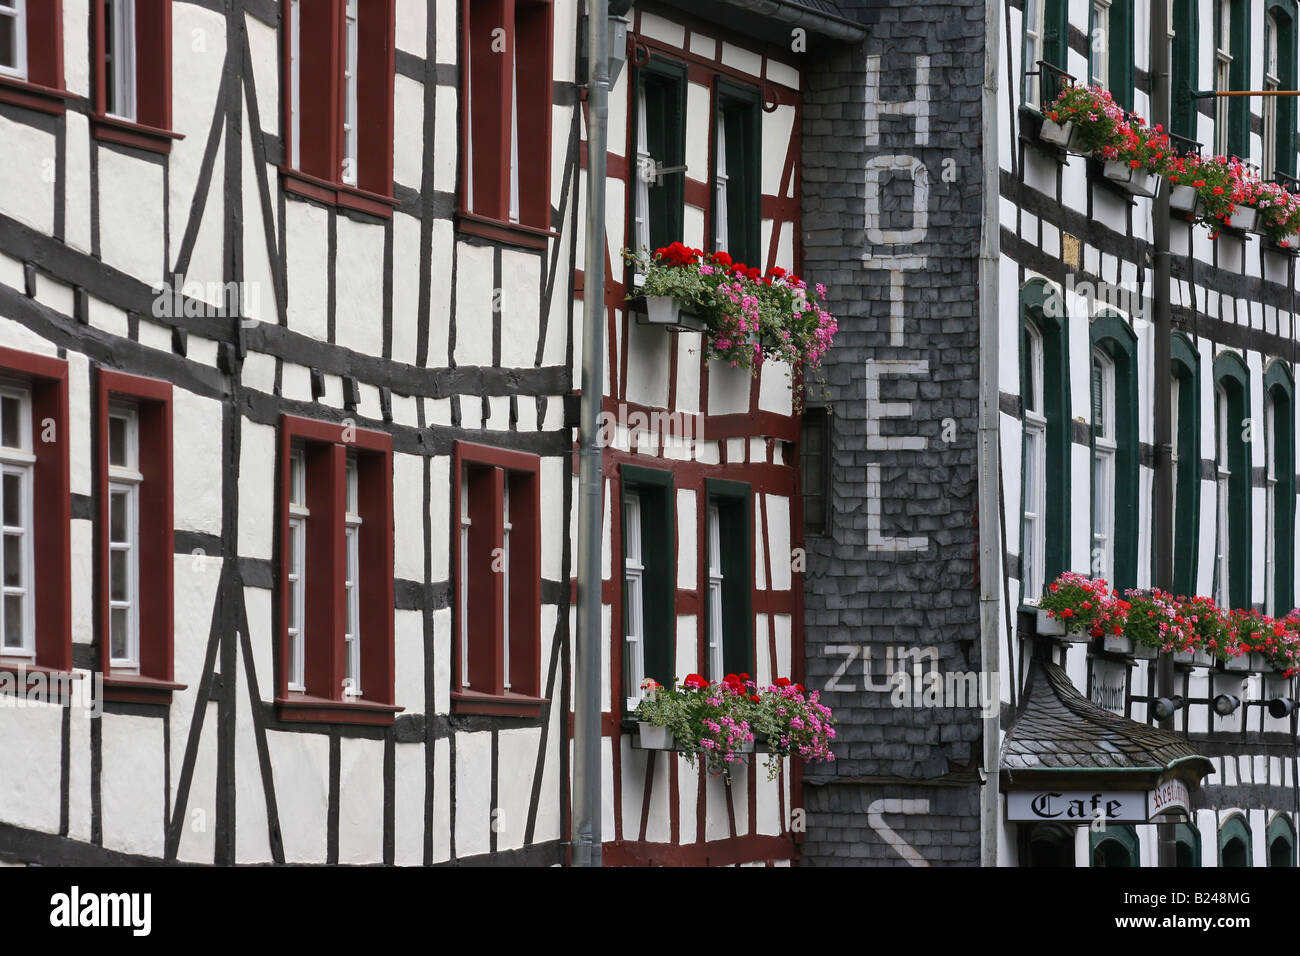 Traditional German architecture - fachwerk - in the town of Monschau, Eifel region. Stock Photo